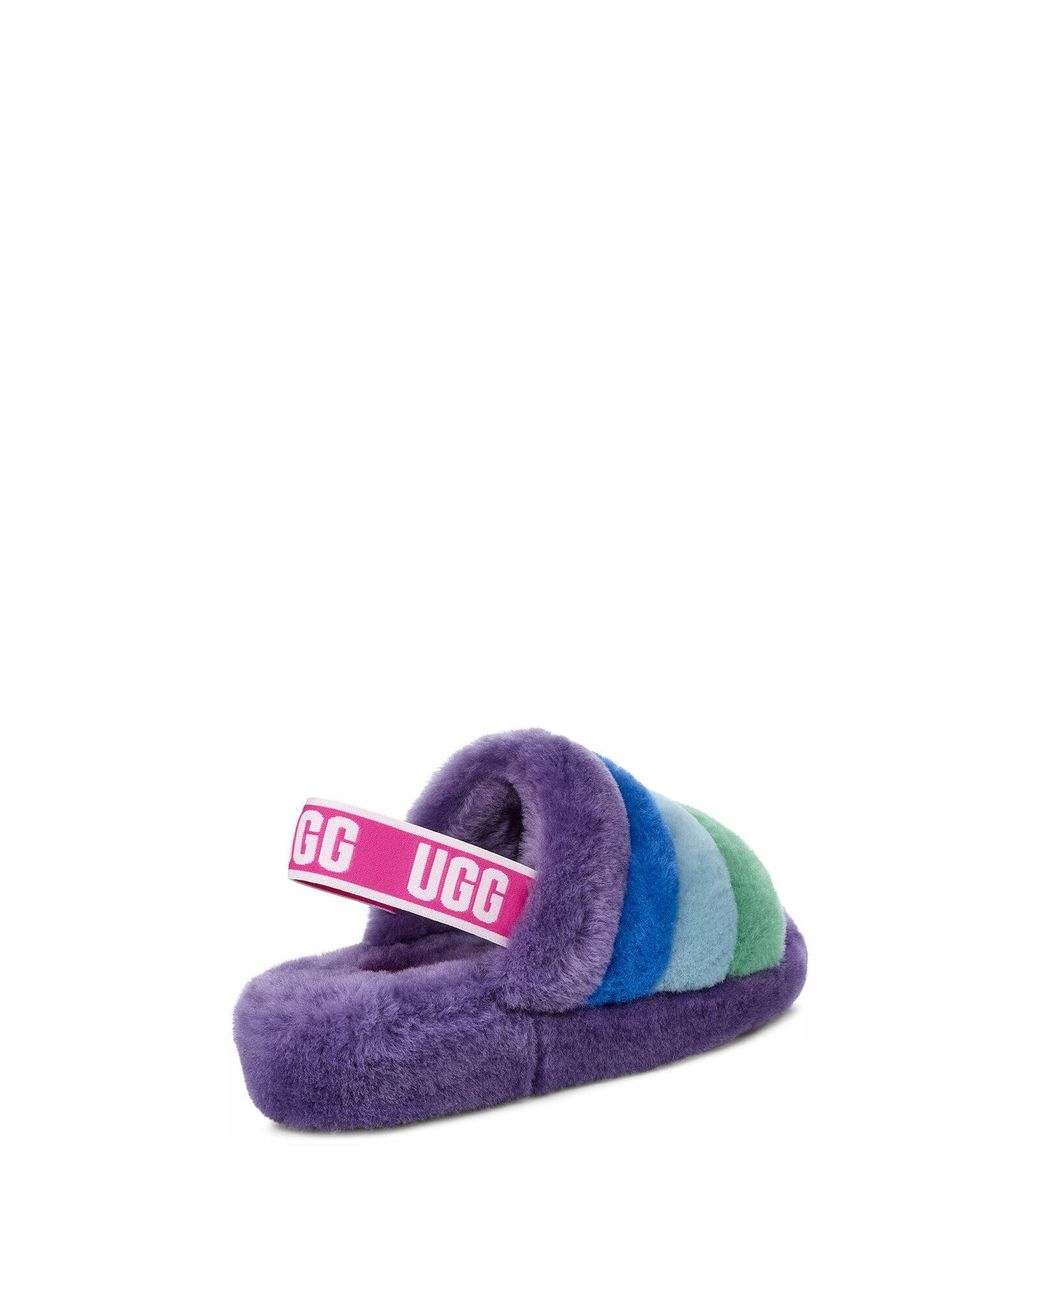 light purple ugg slippers